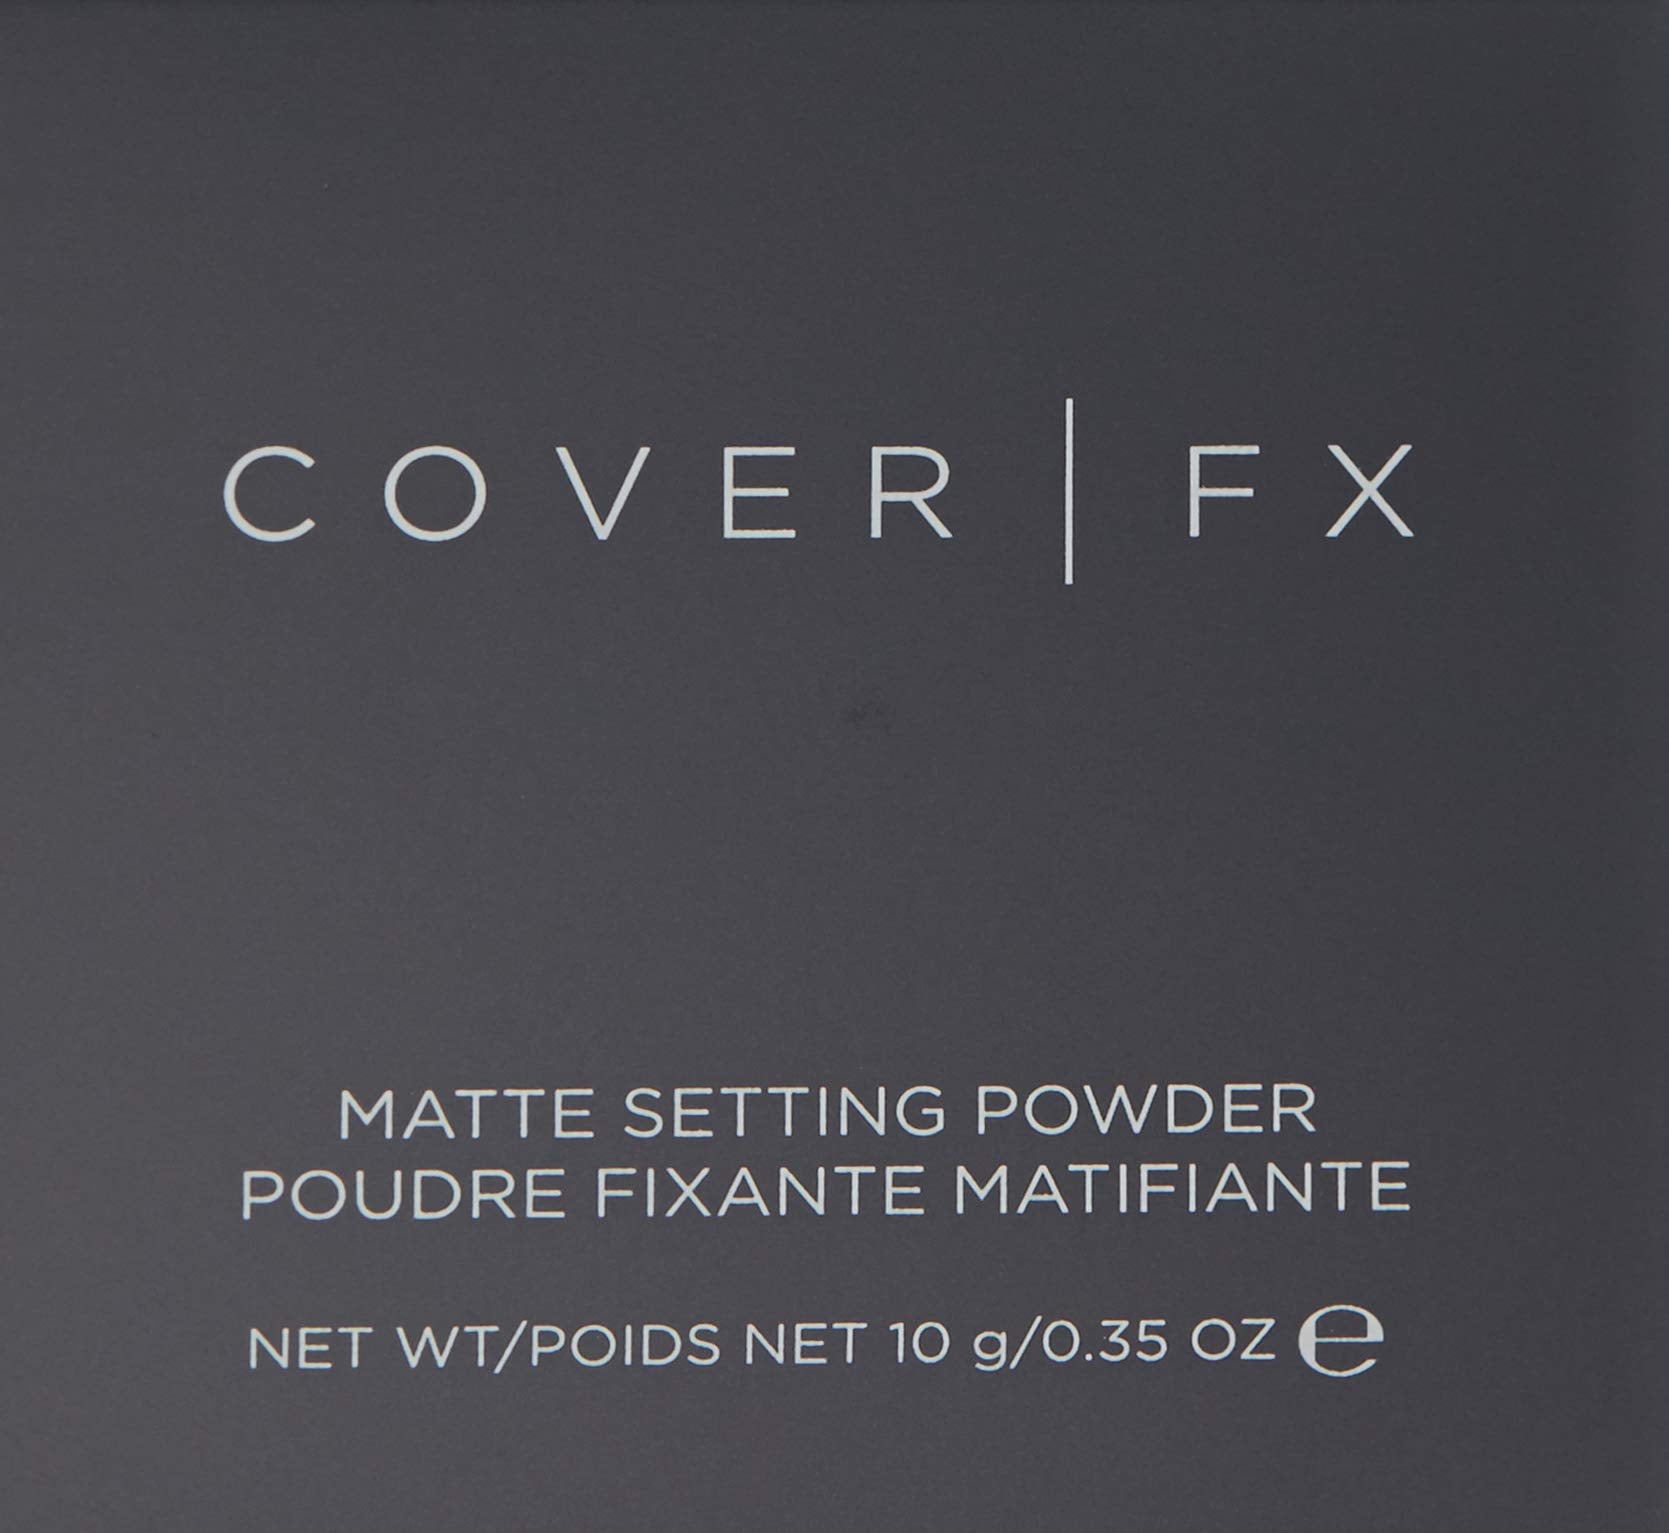 COVER FX Matte Illuminating Setting Powder